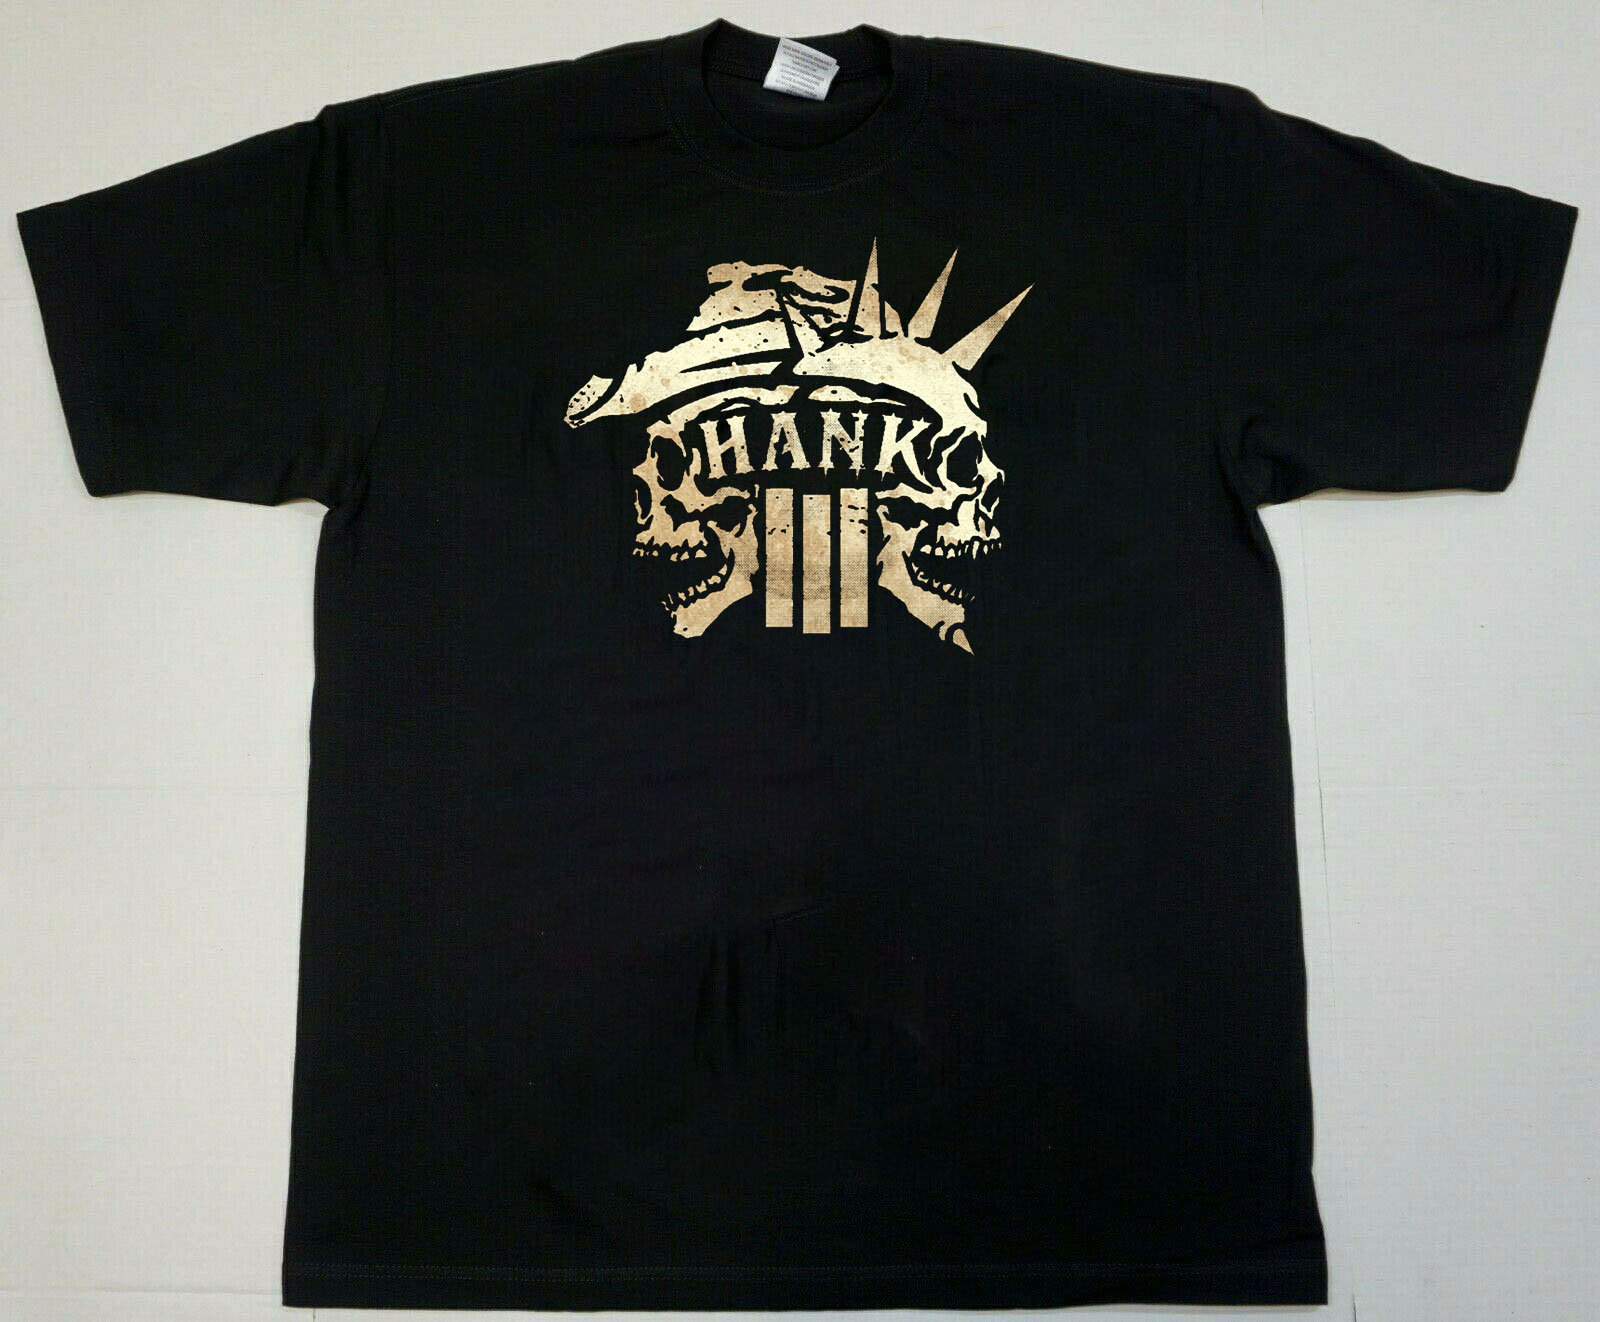 Hank williams III Hellbilly Logo black Unisex Size Tshirt